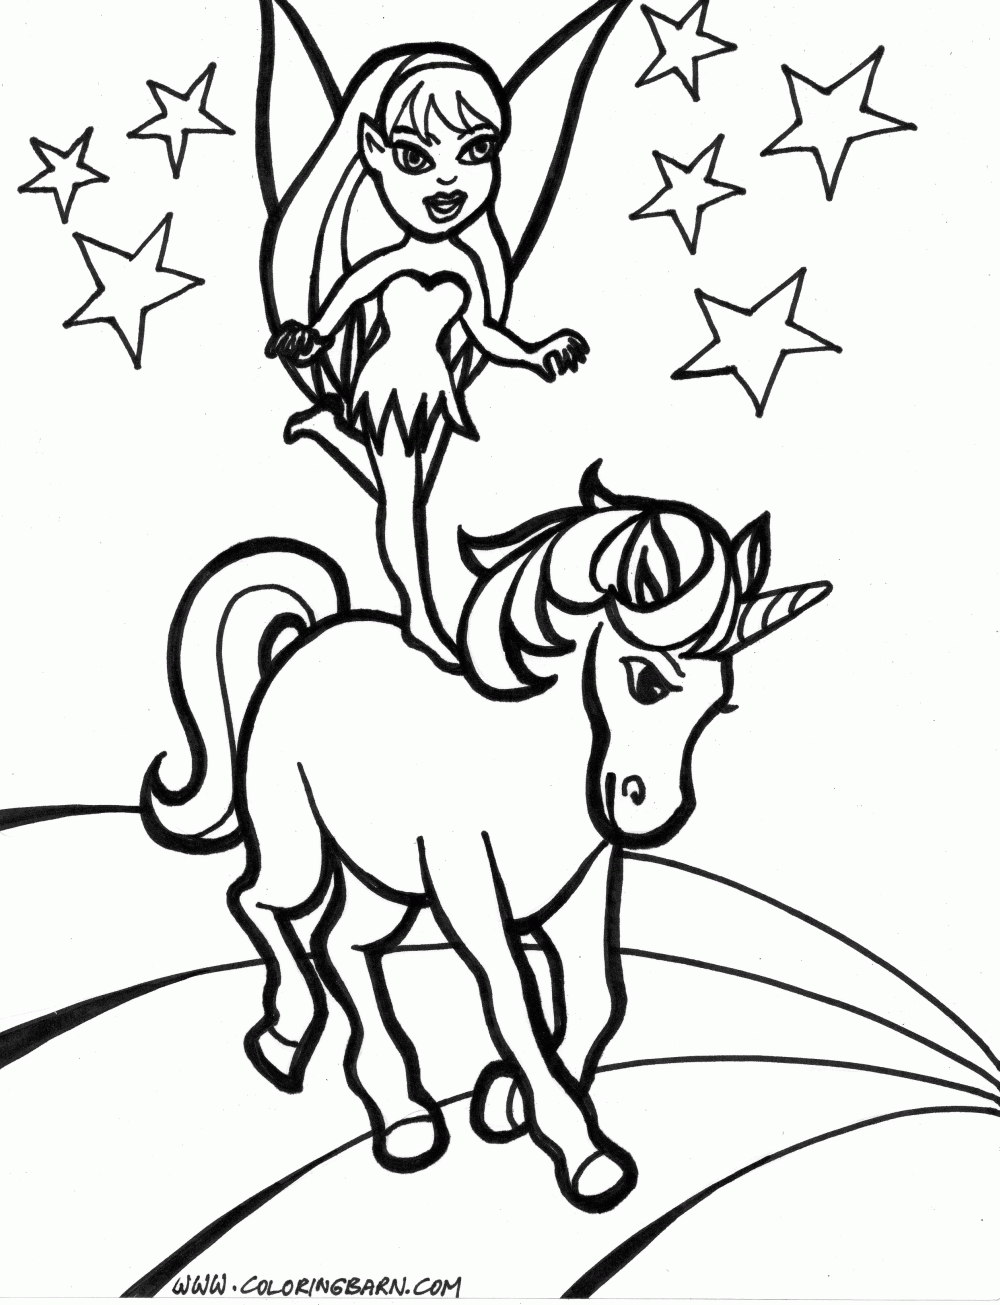 Free Princess Unicorn Coloring Pages, Download Free Princess ...